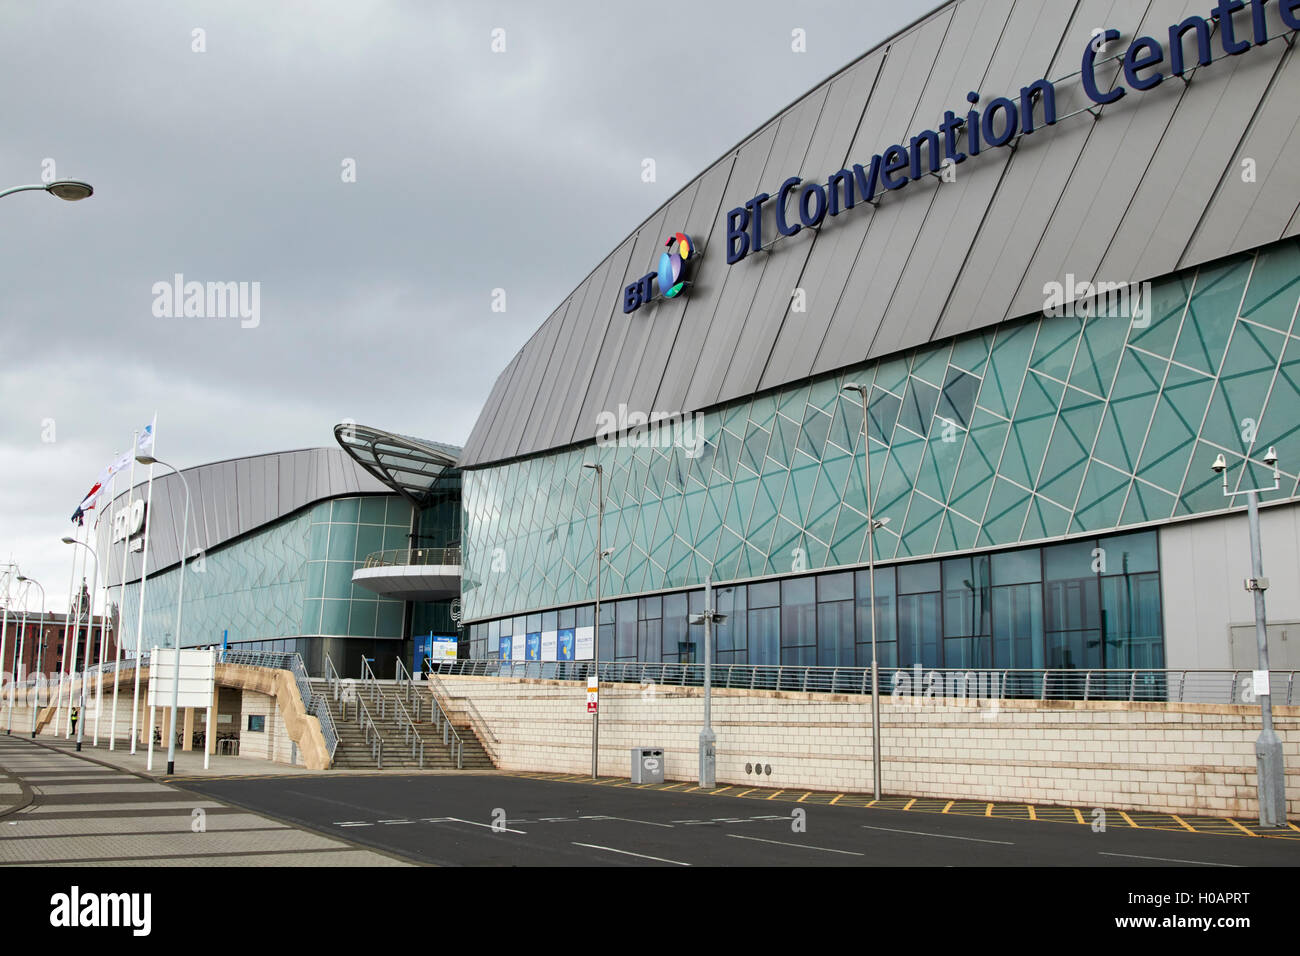 Bt convention centre et echo arena Liverpool Merseyside UK Banque D'Images